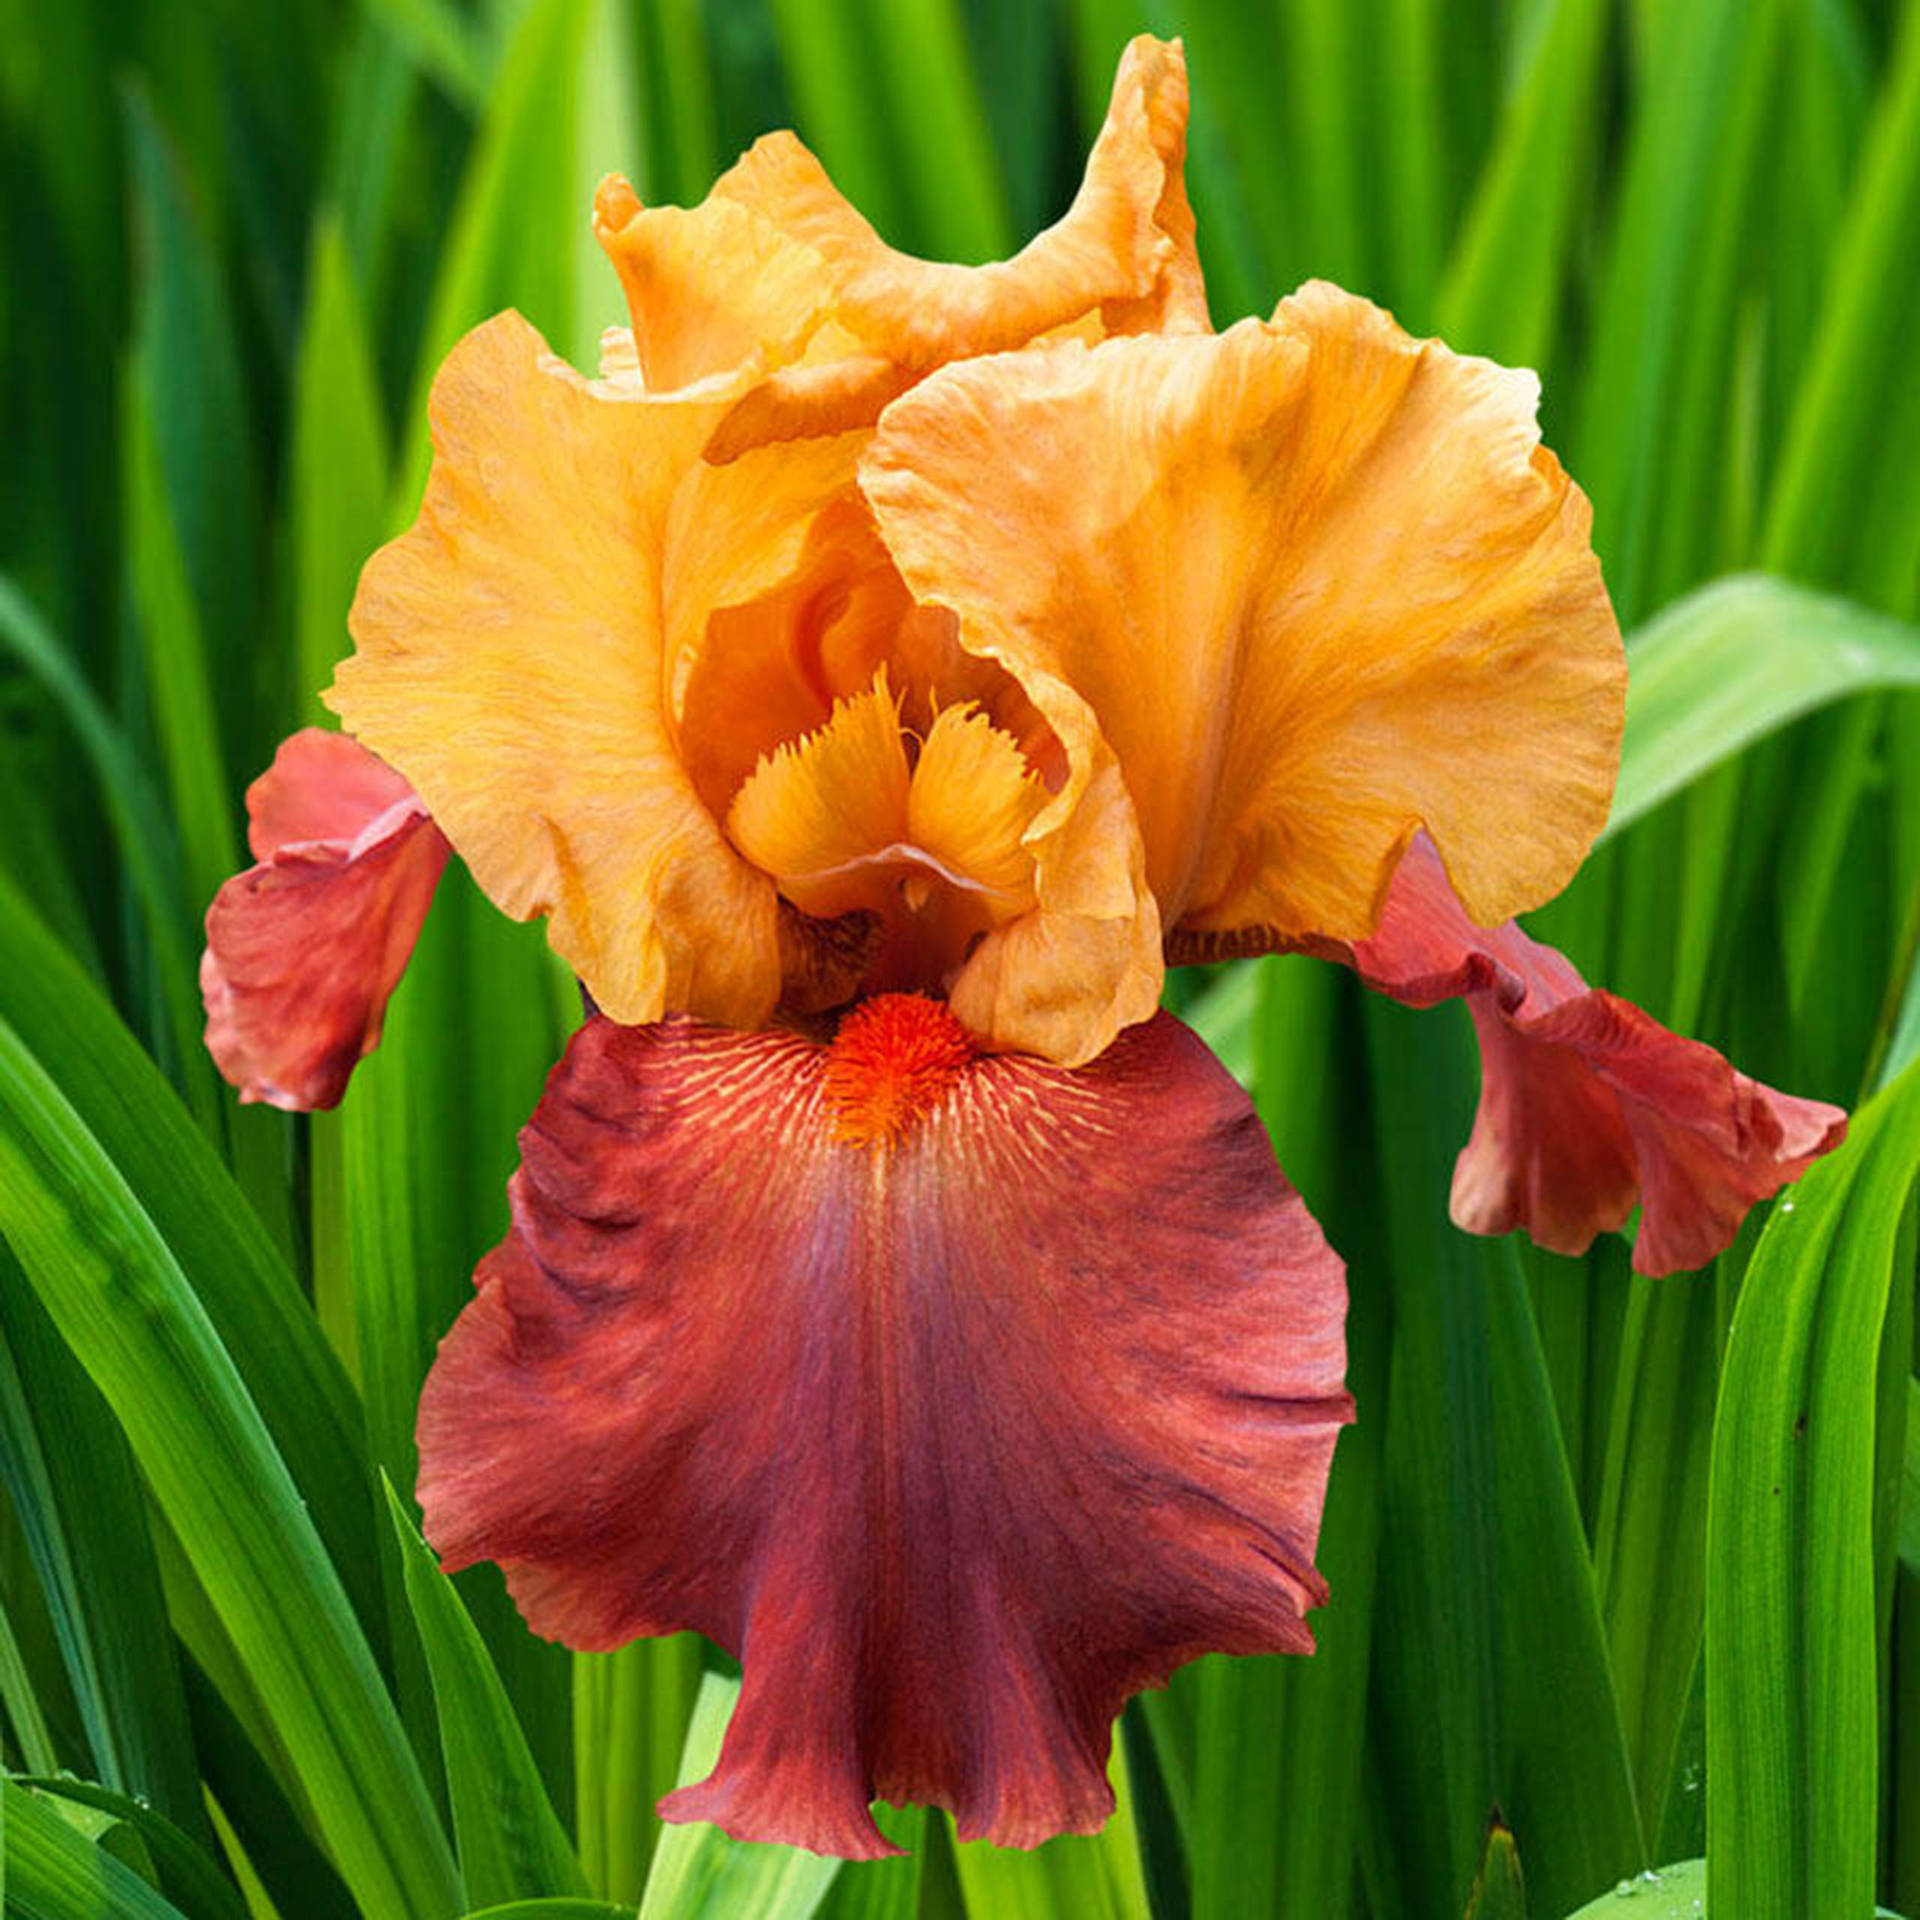 Caption: Stunning Shot Of A Reblooming Iris Flower